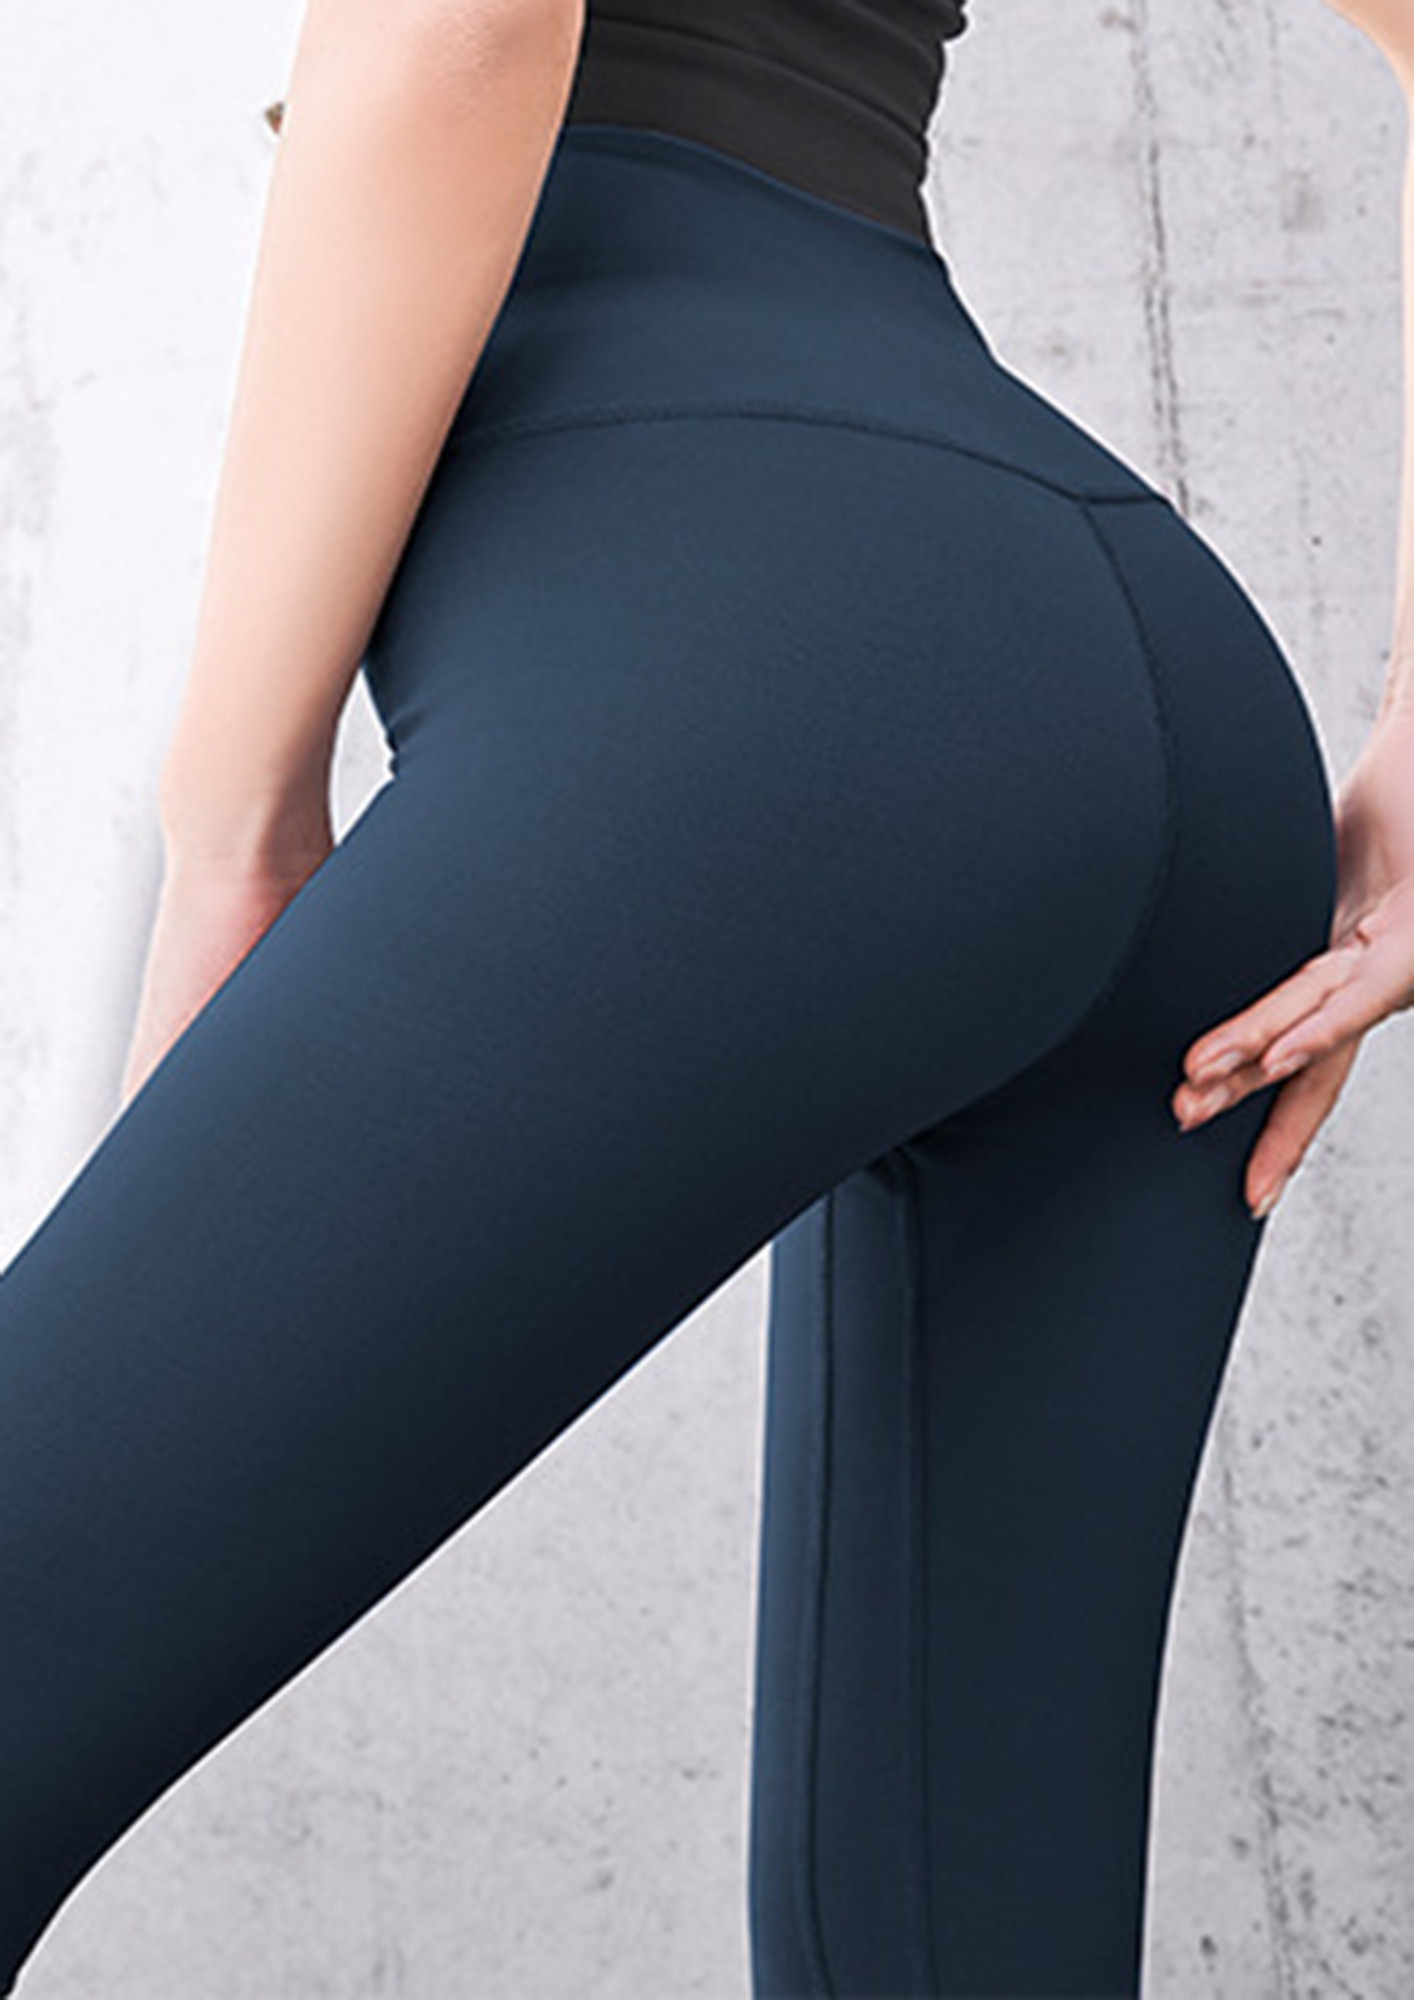 Boxate Yoga Pants for Womens  Pilates and Skating Pants for Ladies  KSHM